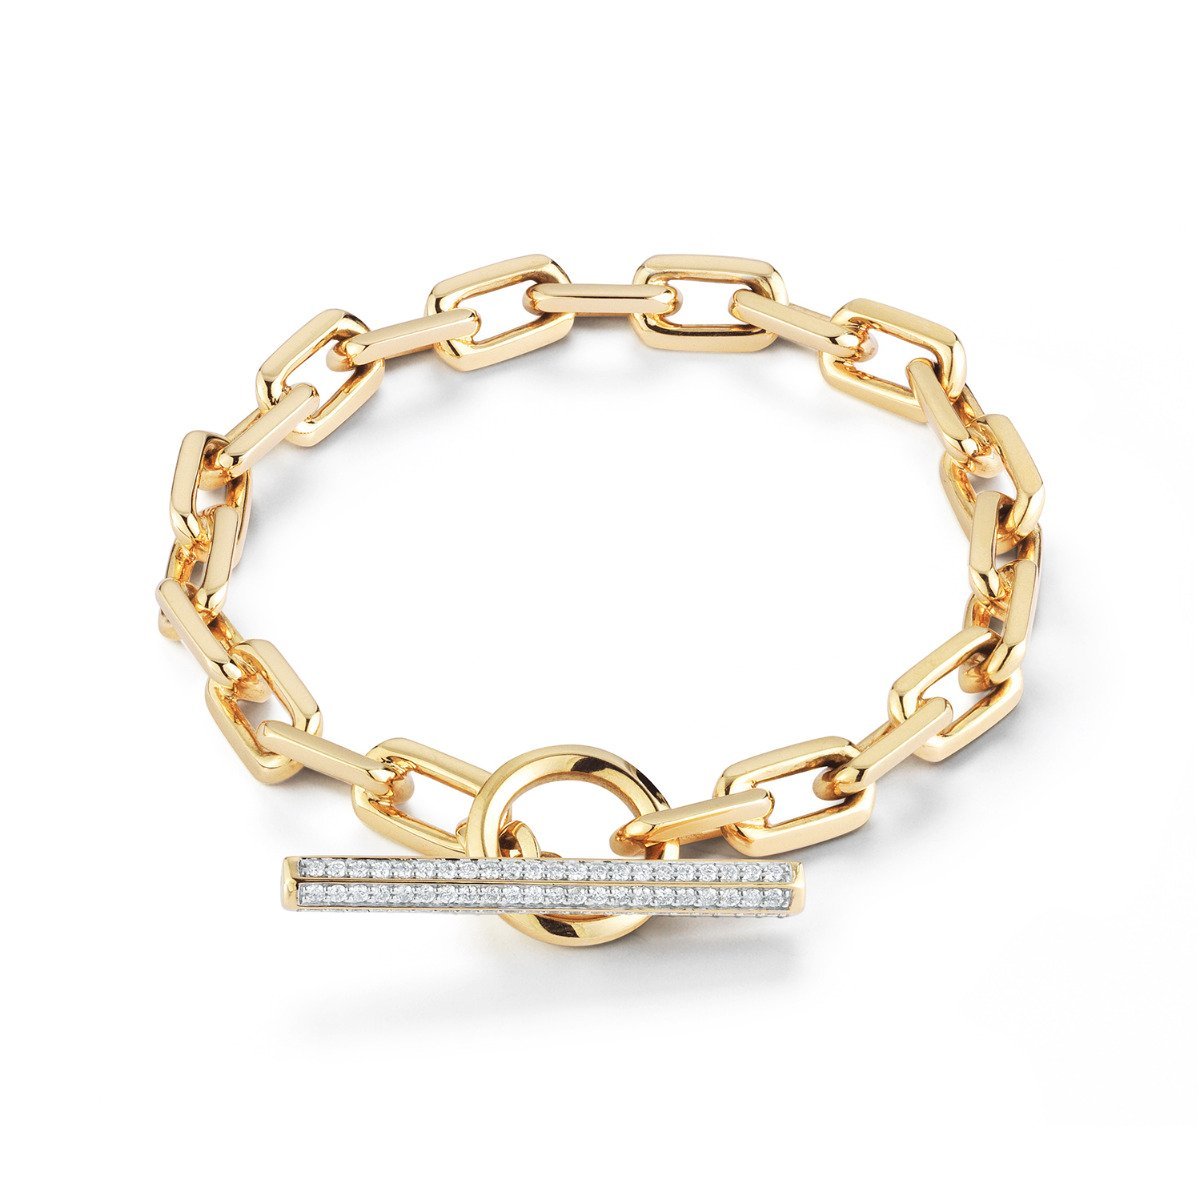 Walters Faith “Saxon” 18kt Yellow Gold Diamond Toggle Chain Link Bracelet